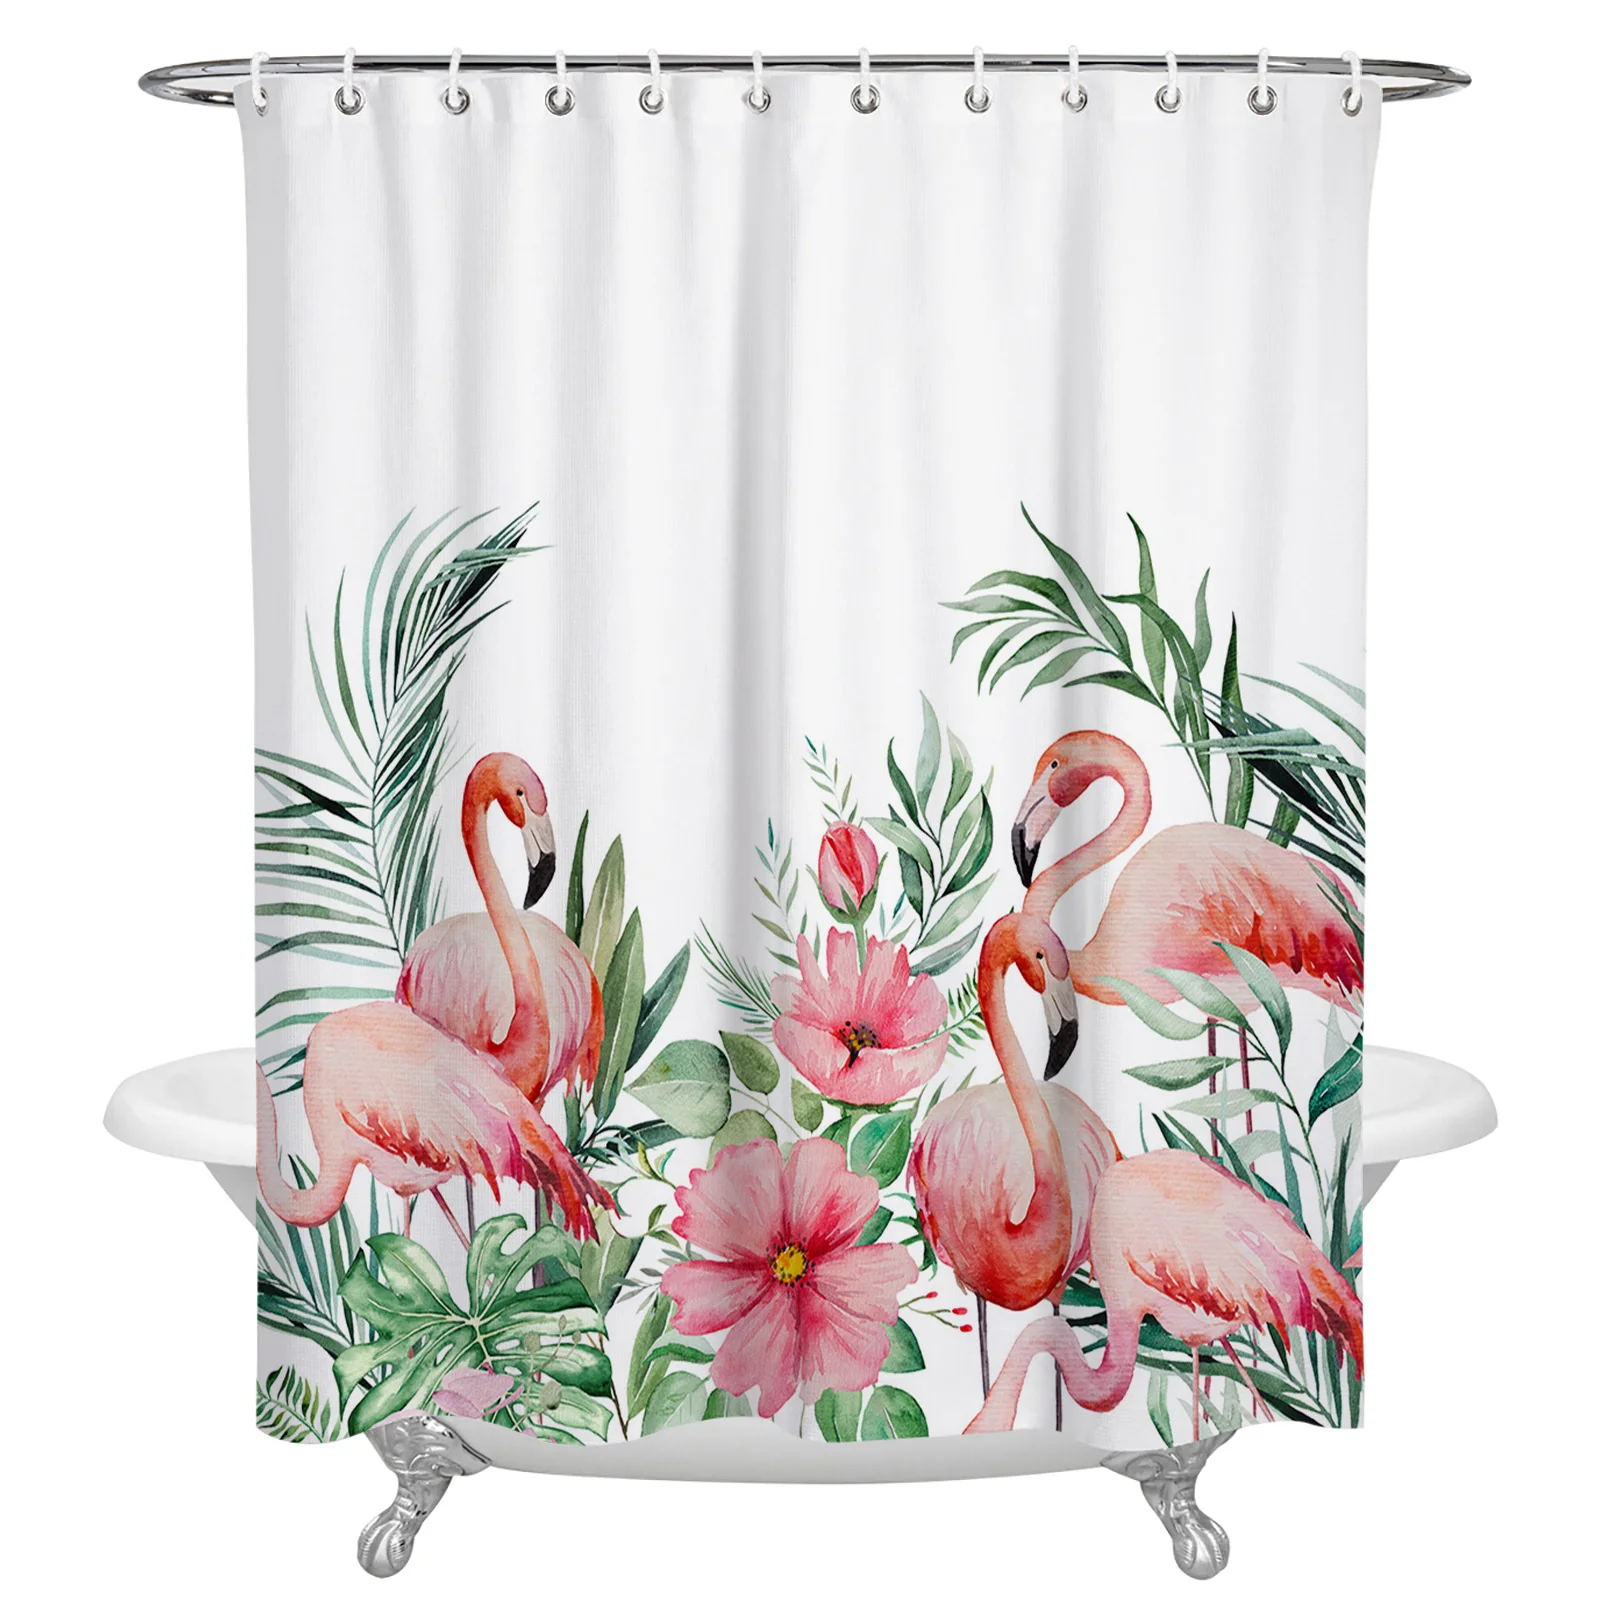 

Ins Style Tropical Plants Flamingos Shower Curtains Waterproof Bath Curtains Home Decor Modern Luxury Bathroom Curtain